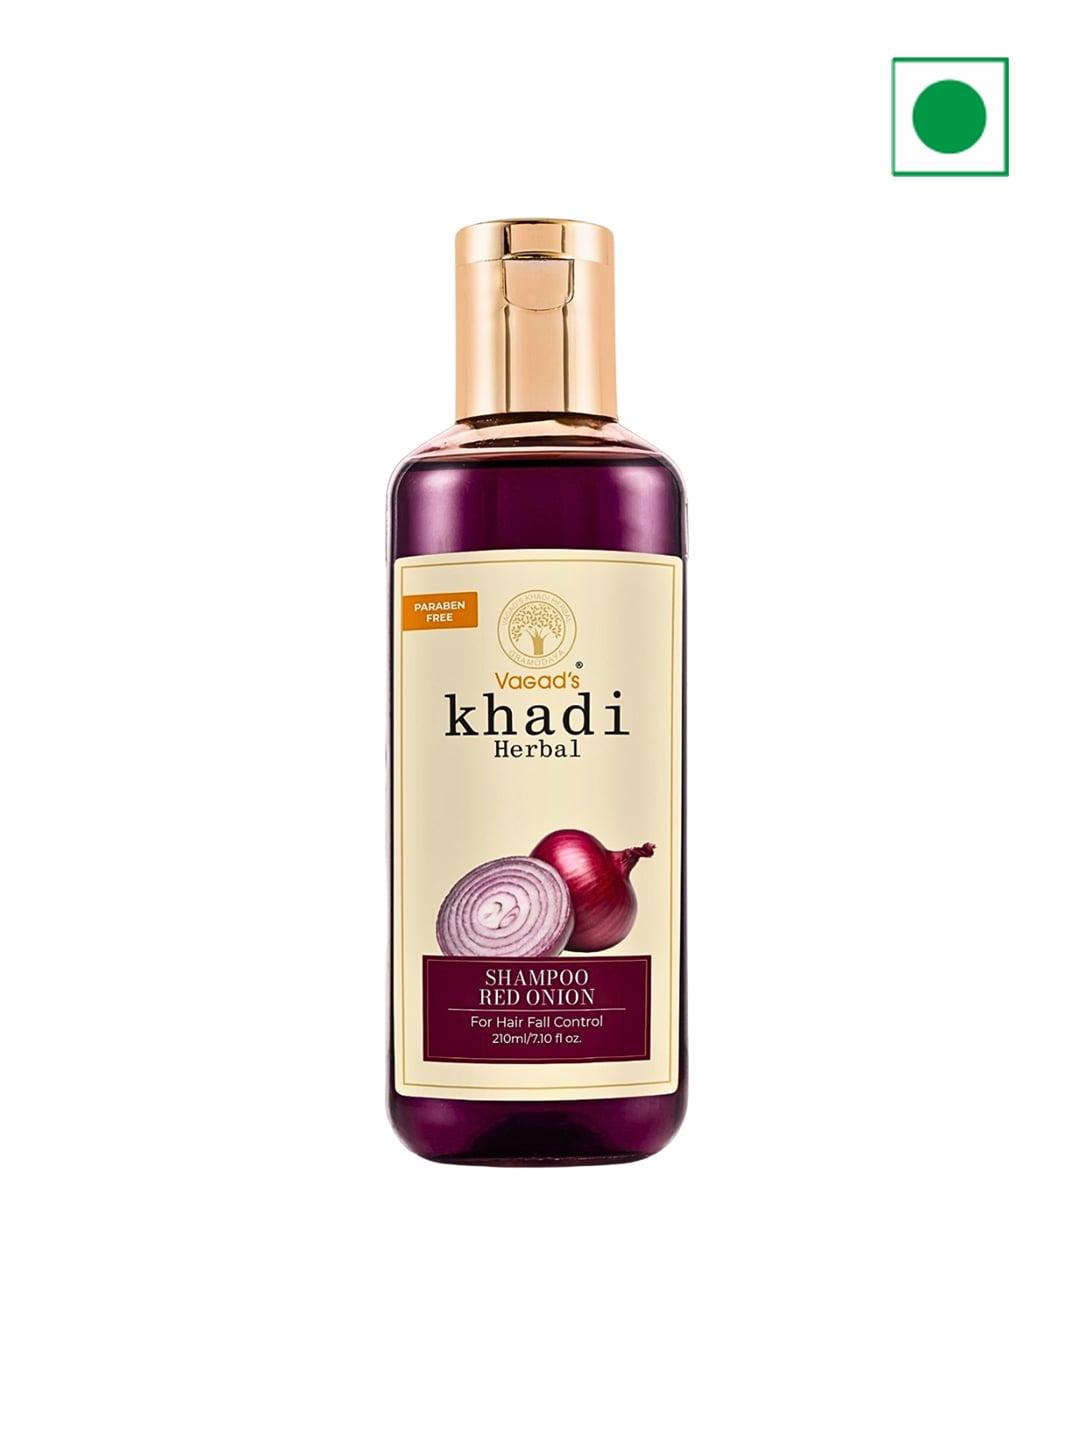 Vagads Khadi Herbal Red Onion Shampoo with Aloevera - 210 ml